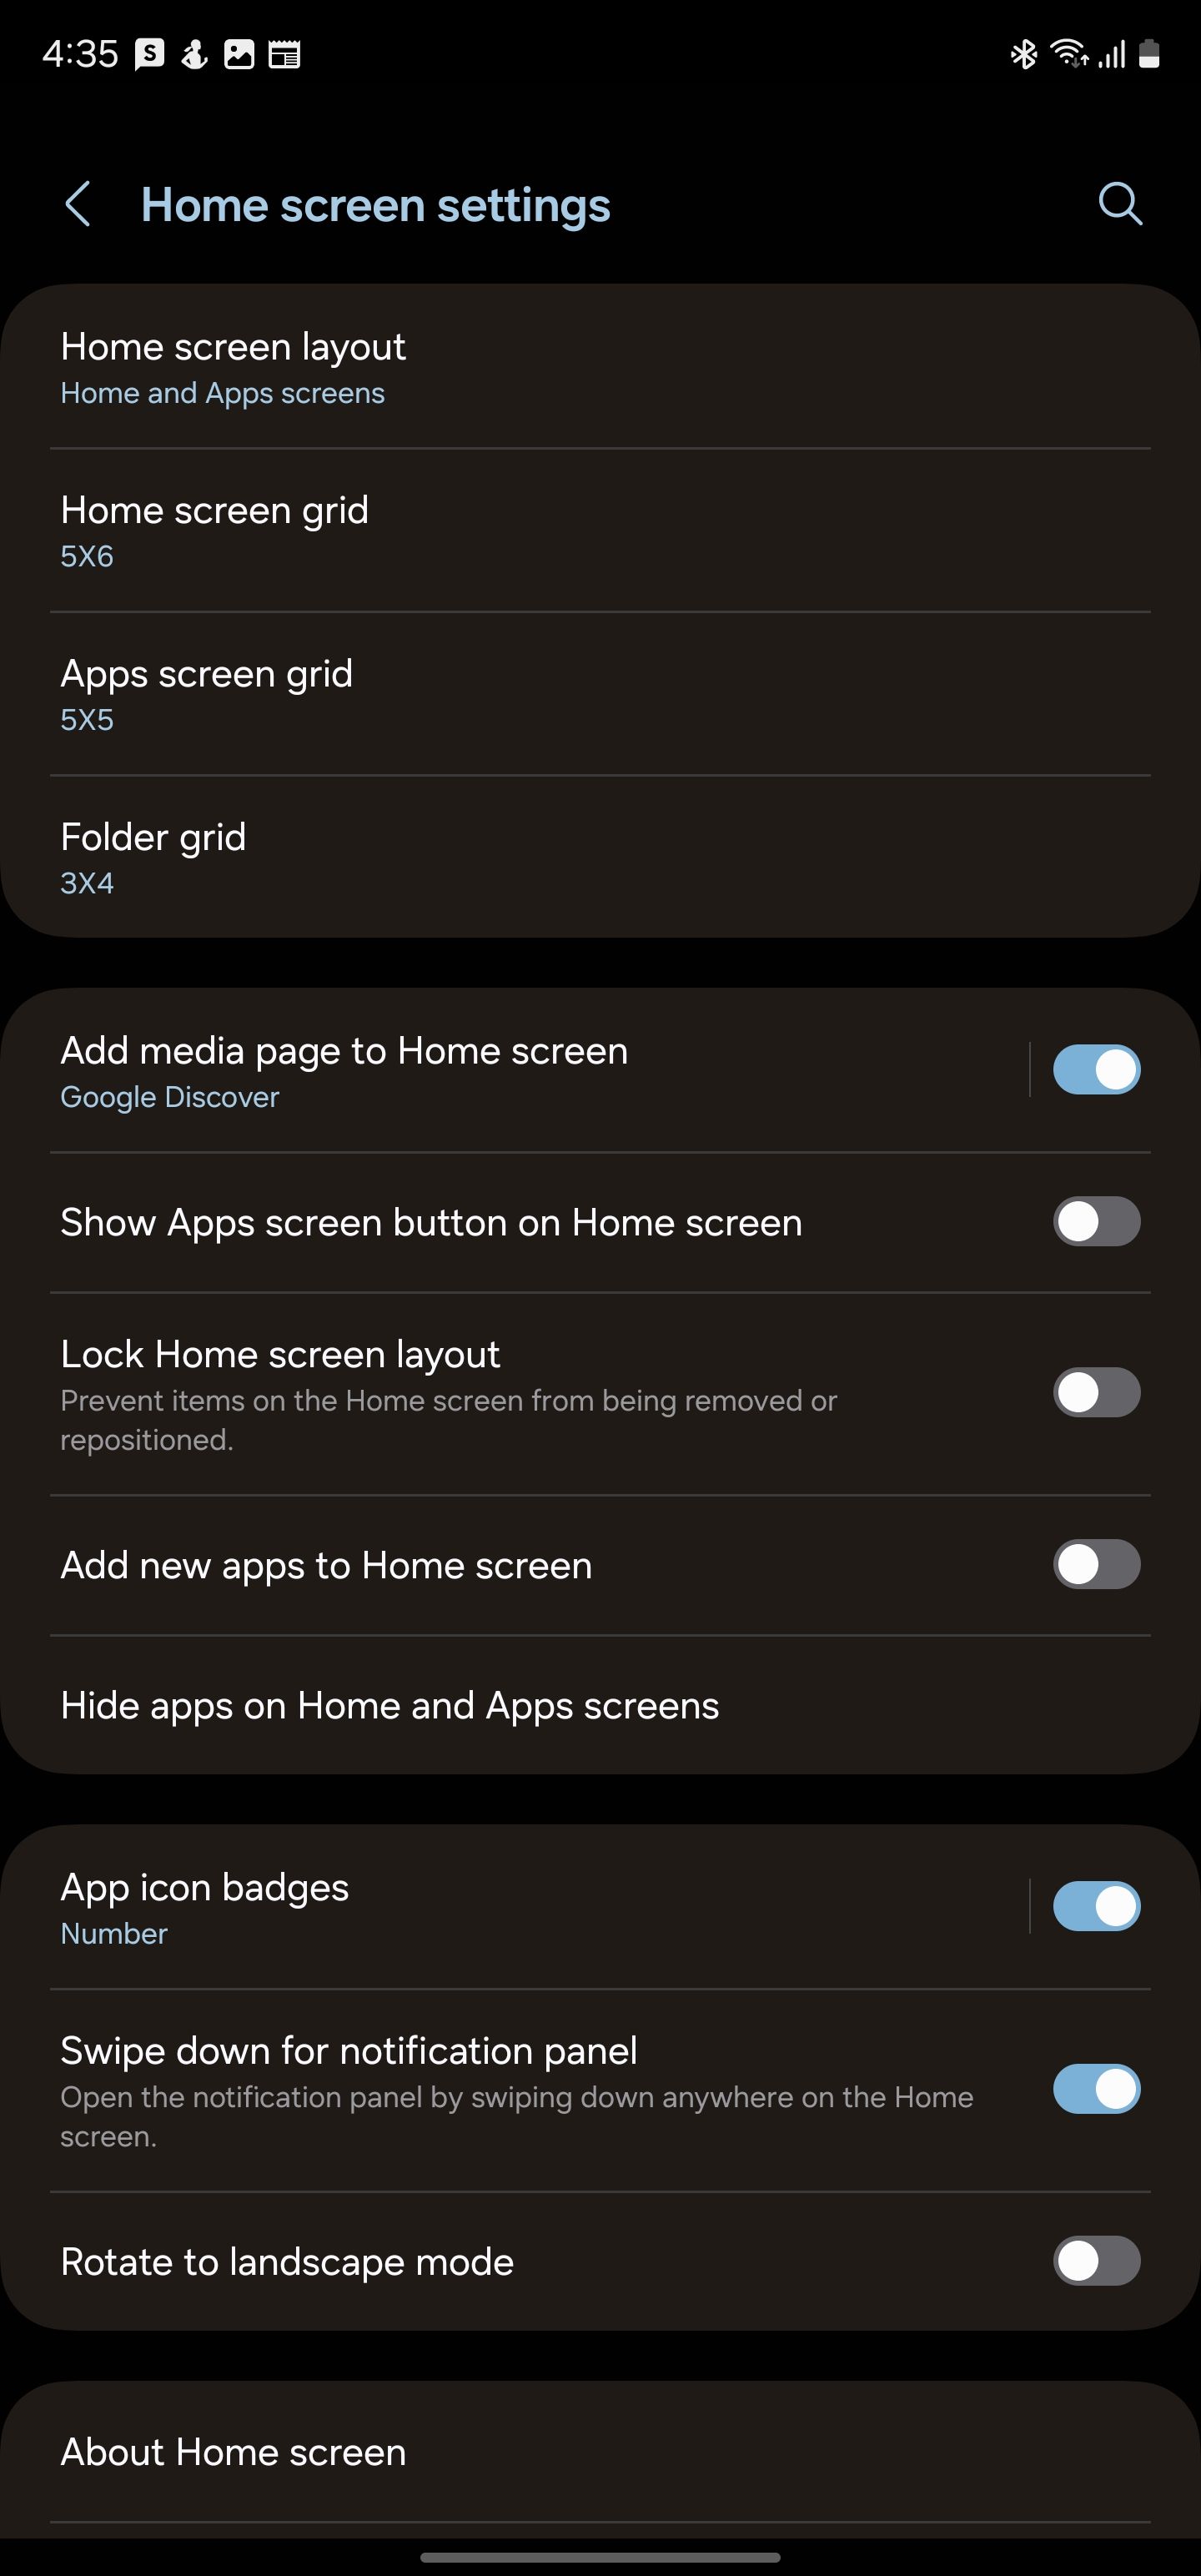 One UI launcher home screen settings